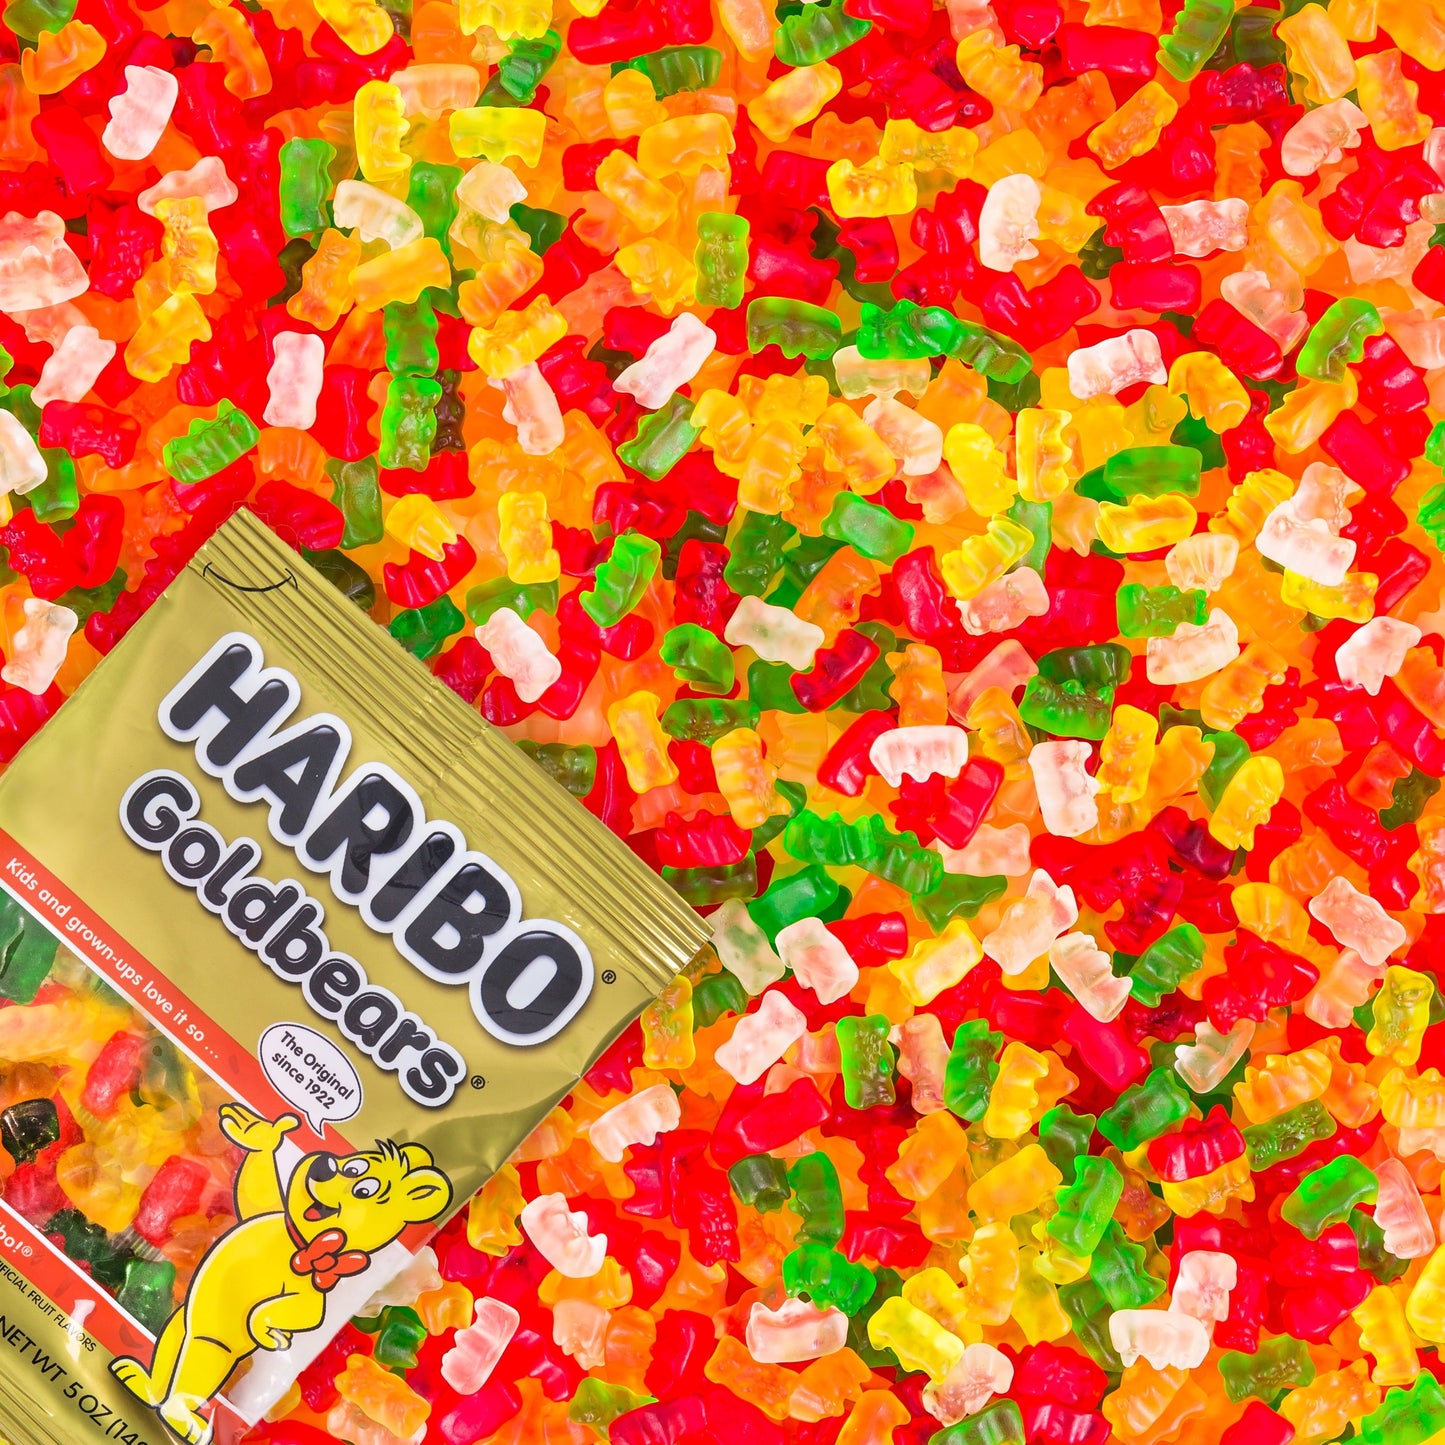 Haribo Goldbears Original Gummy Bears Bag, 4oz